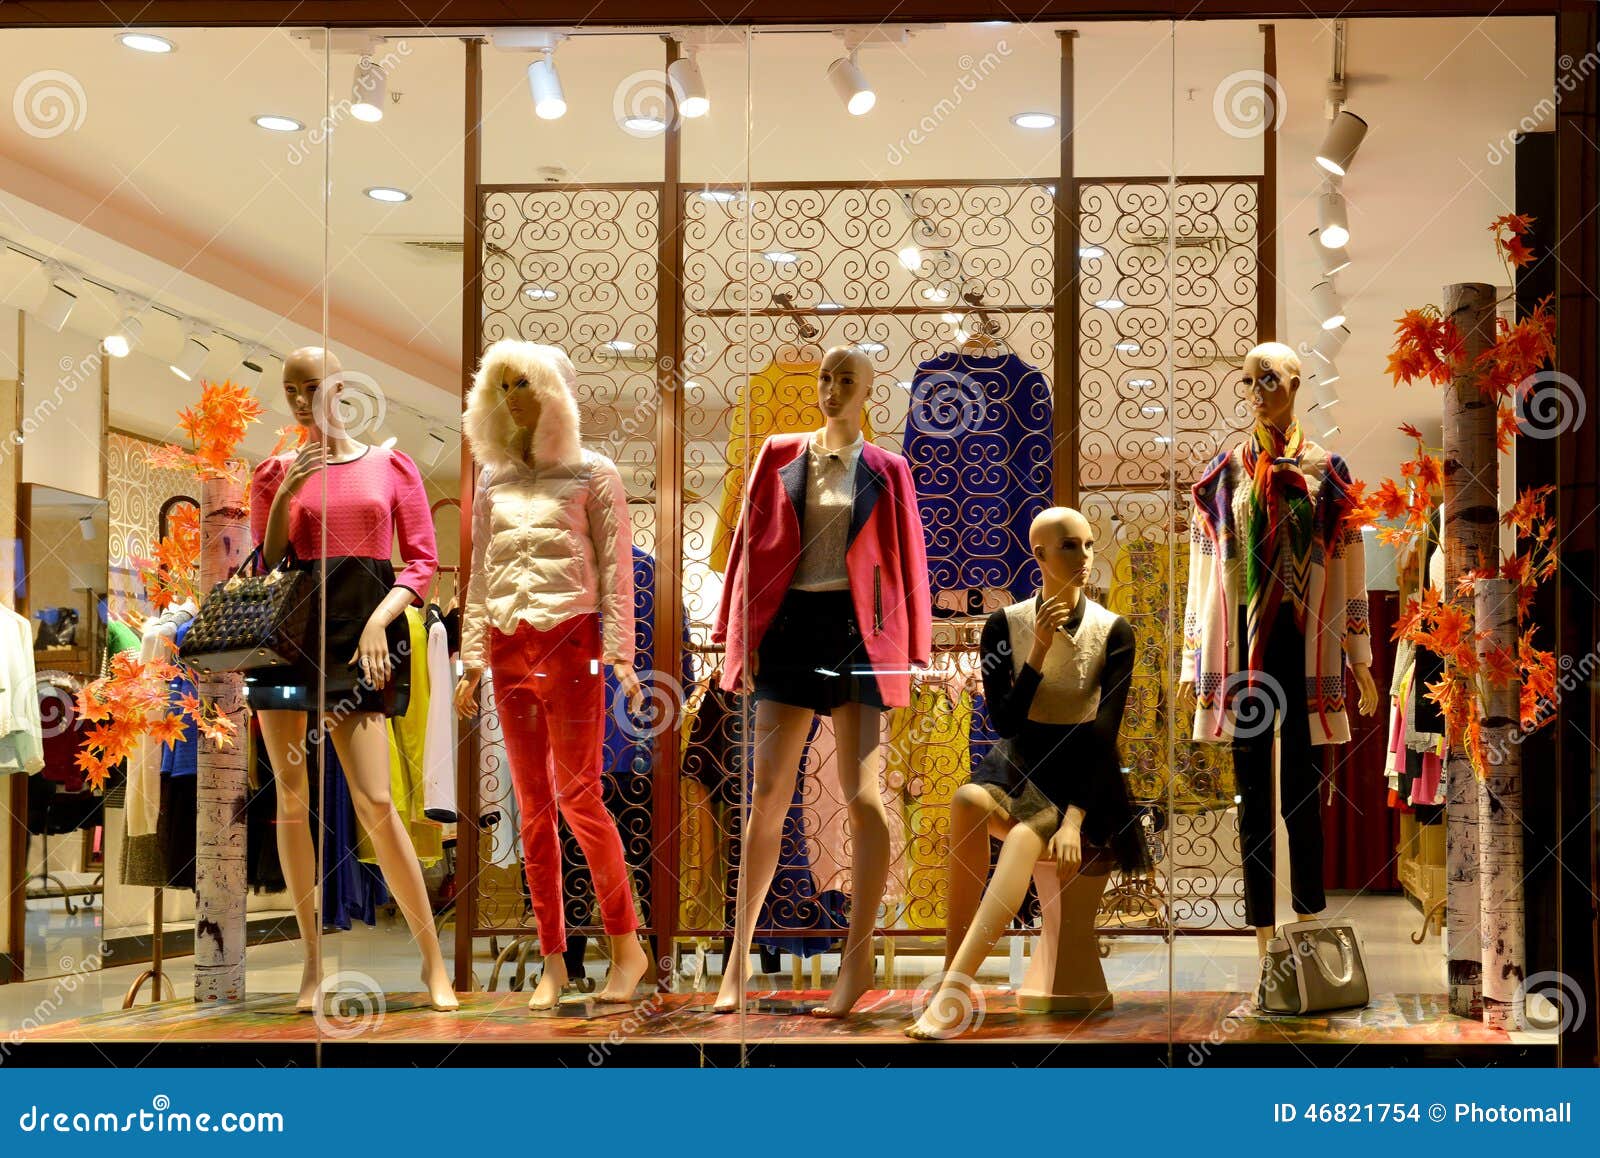 Boutique Window,Fashion Clothing Store,Fashion Store Window in Shopping ...